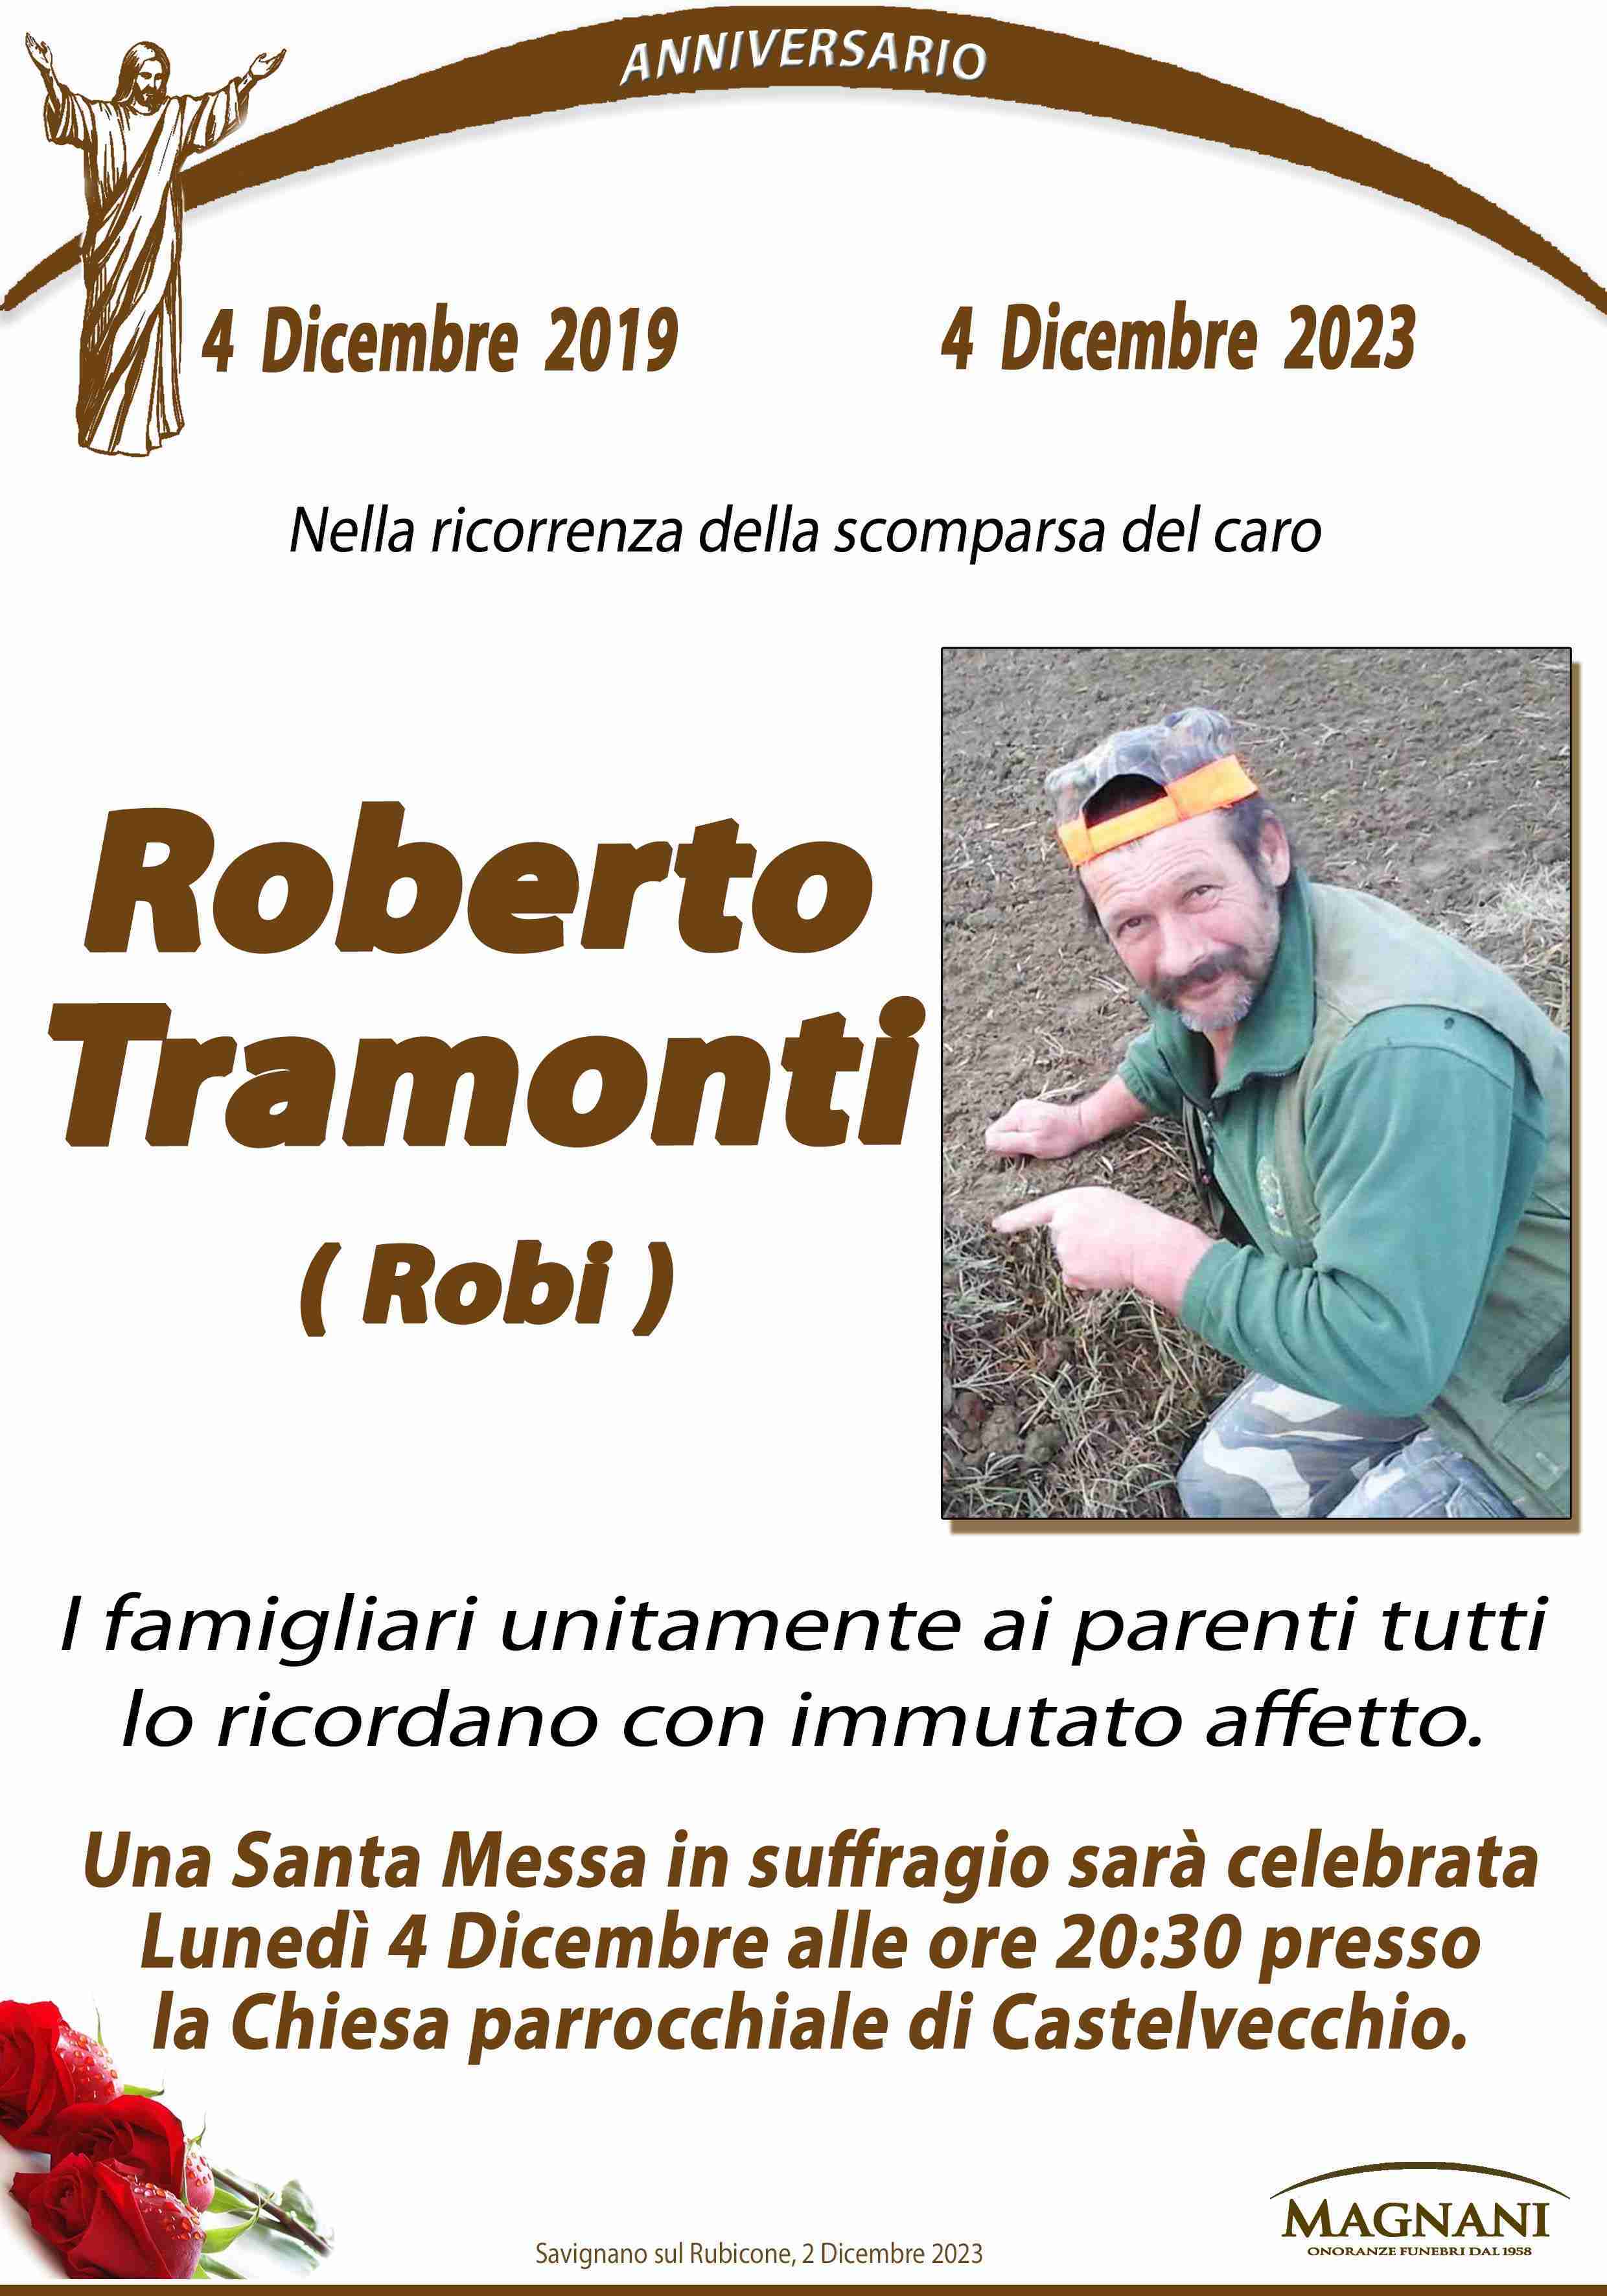 Roberto Tramonti